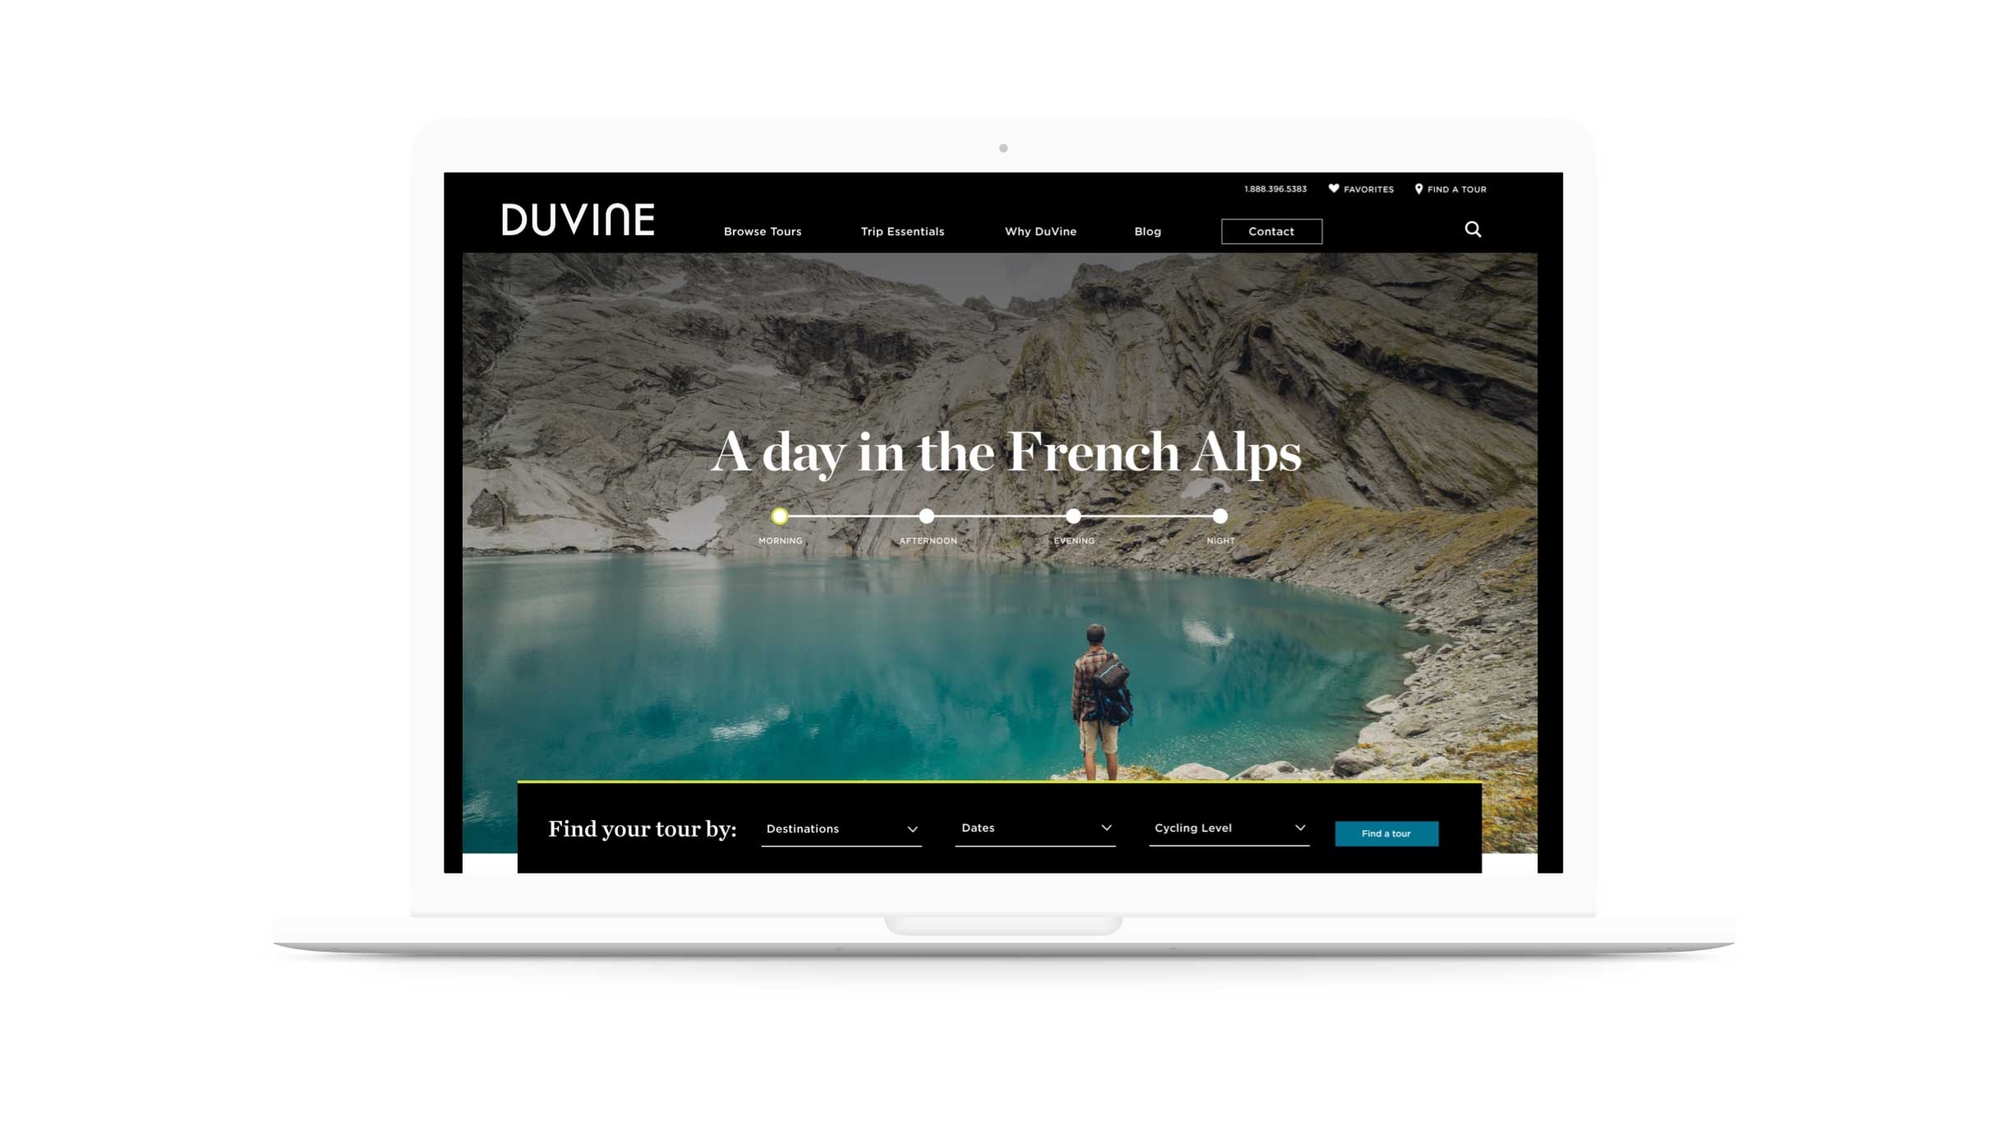 Laptop image of the DuVine website